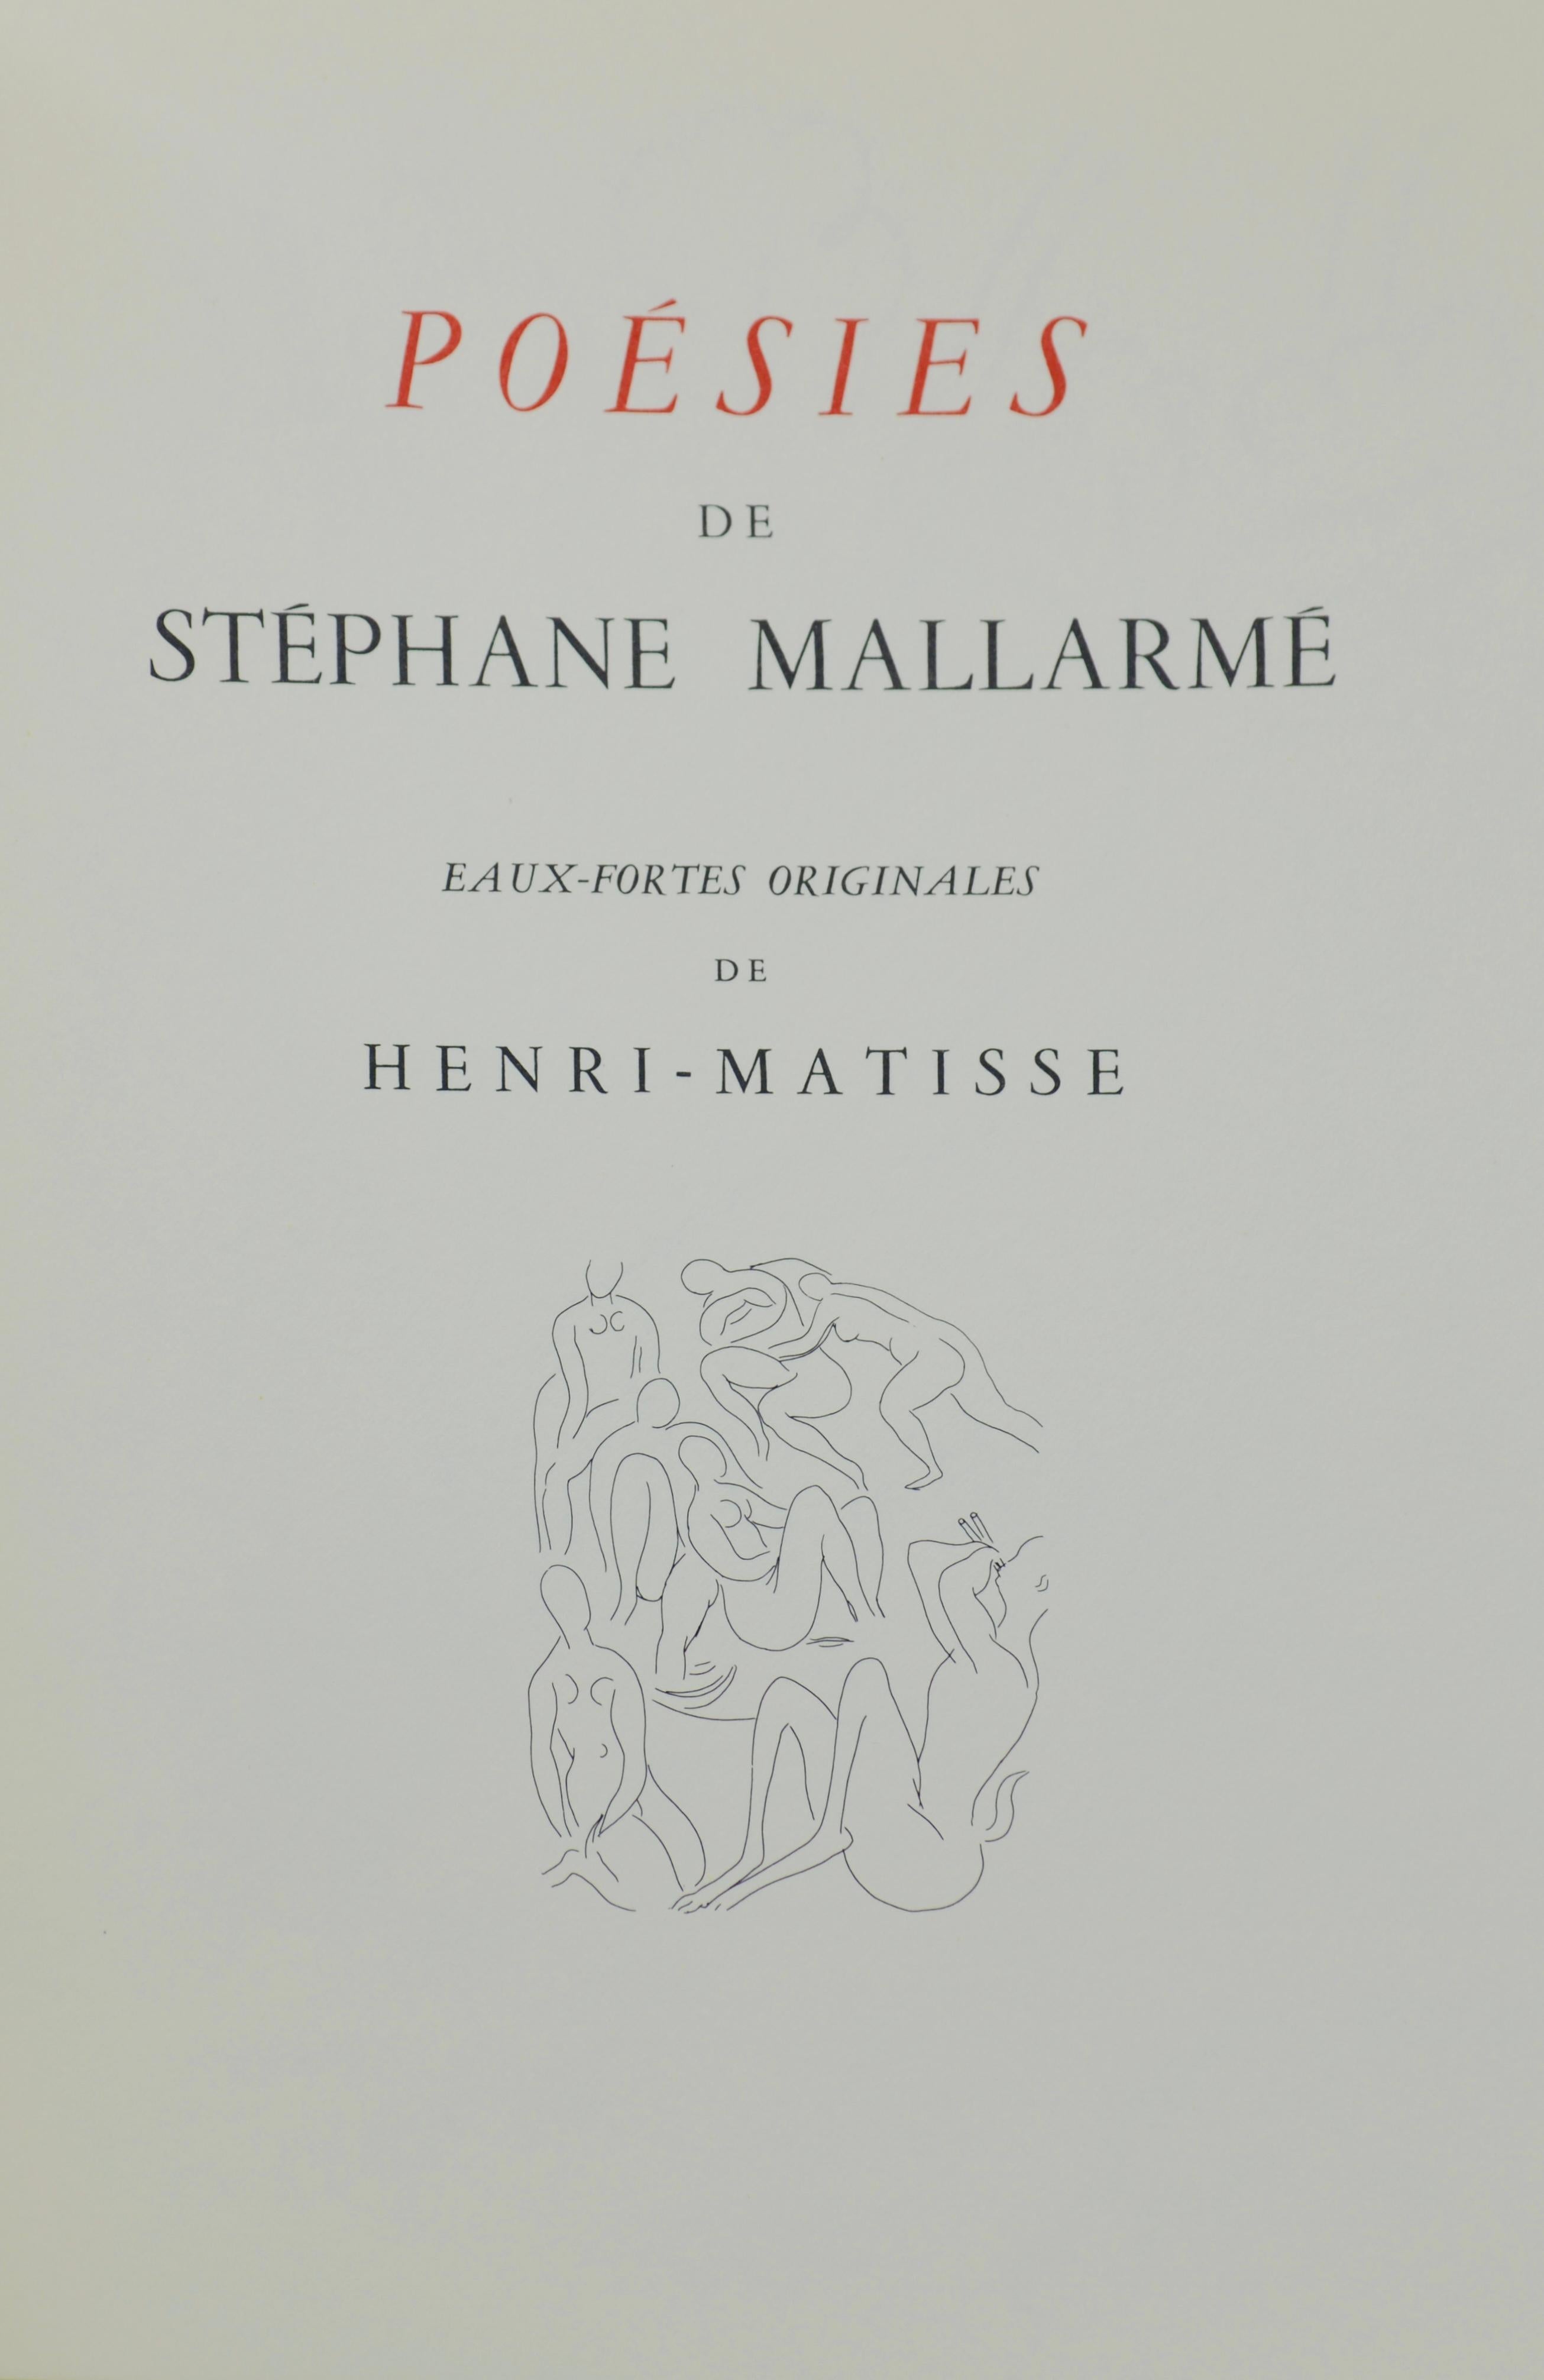 Matisse, Portrait of Baudelaire, Poésies (after) For Sale 1